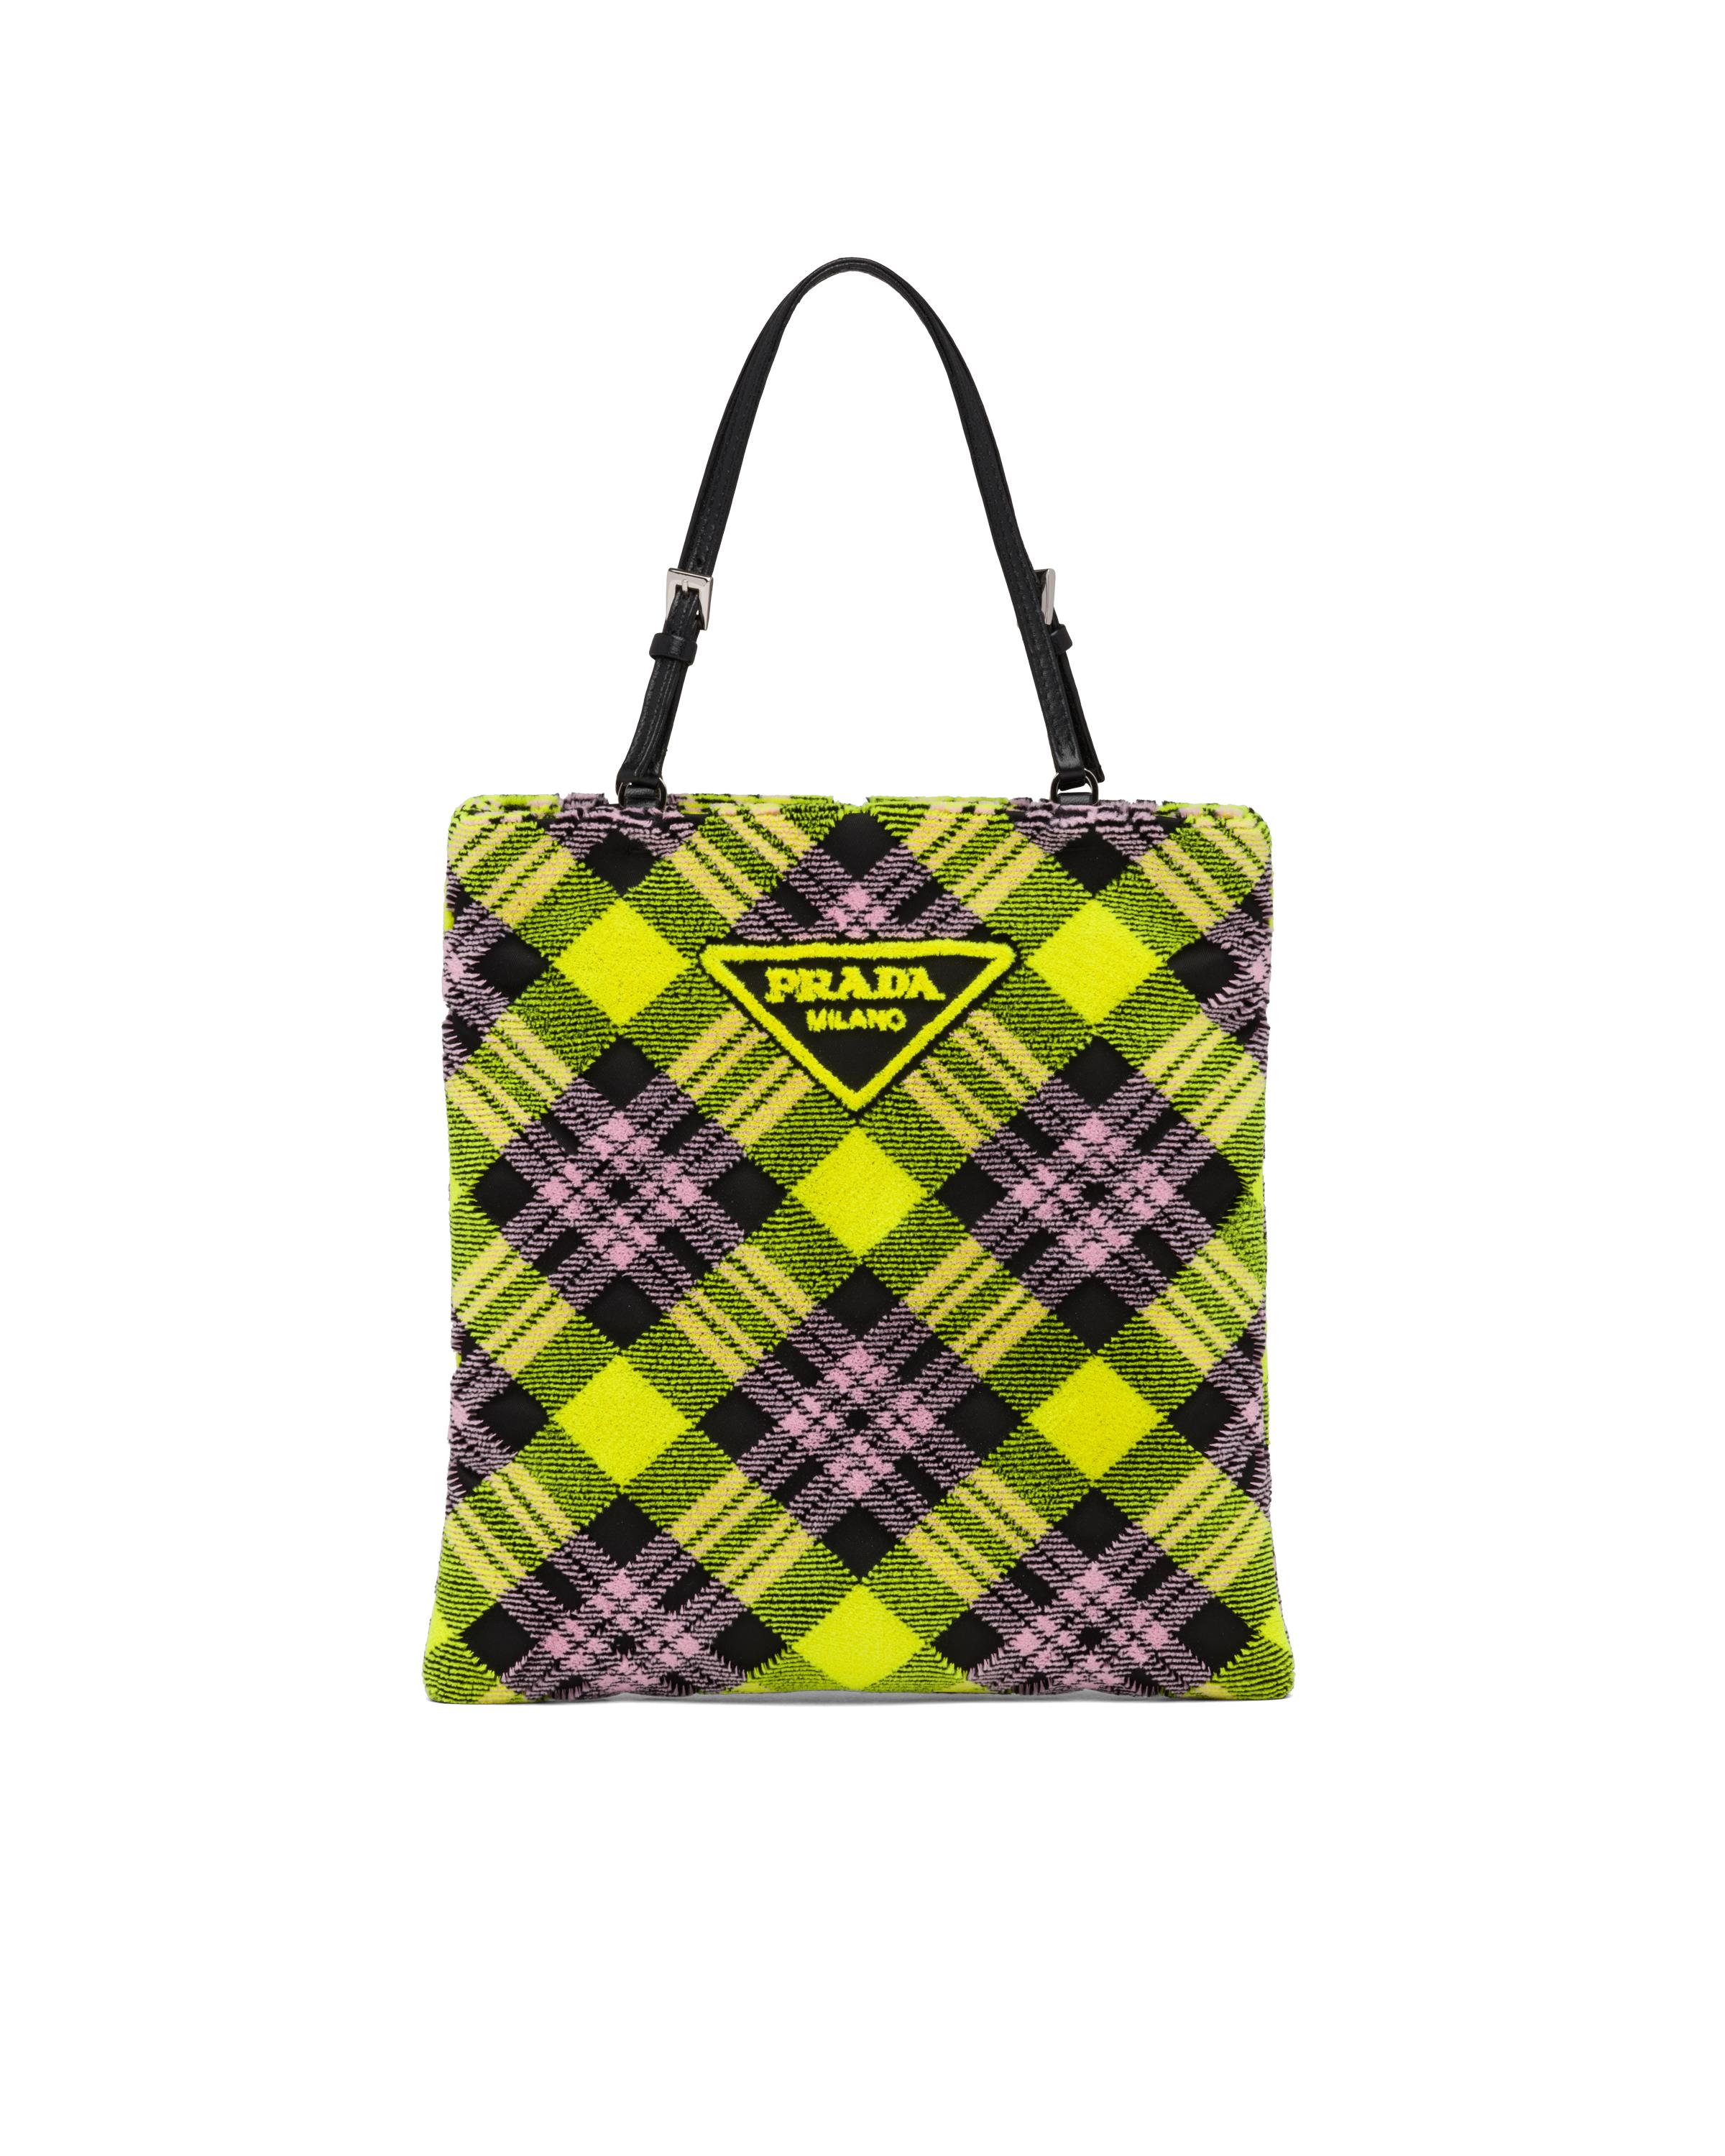 Prada Plaid Velvet Handbag With Logo in Lime Green (Yellow) | Lyst